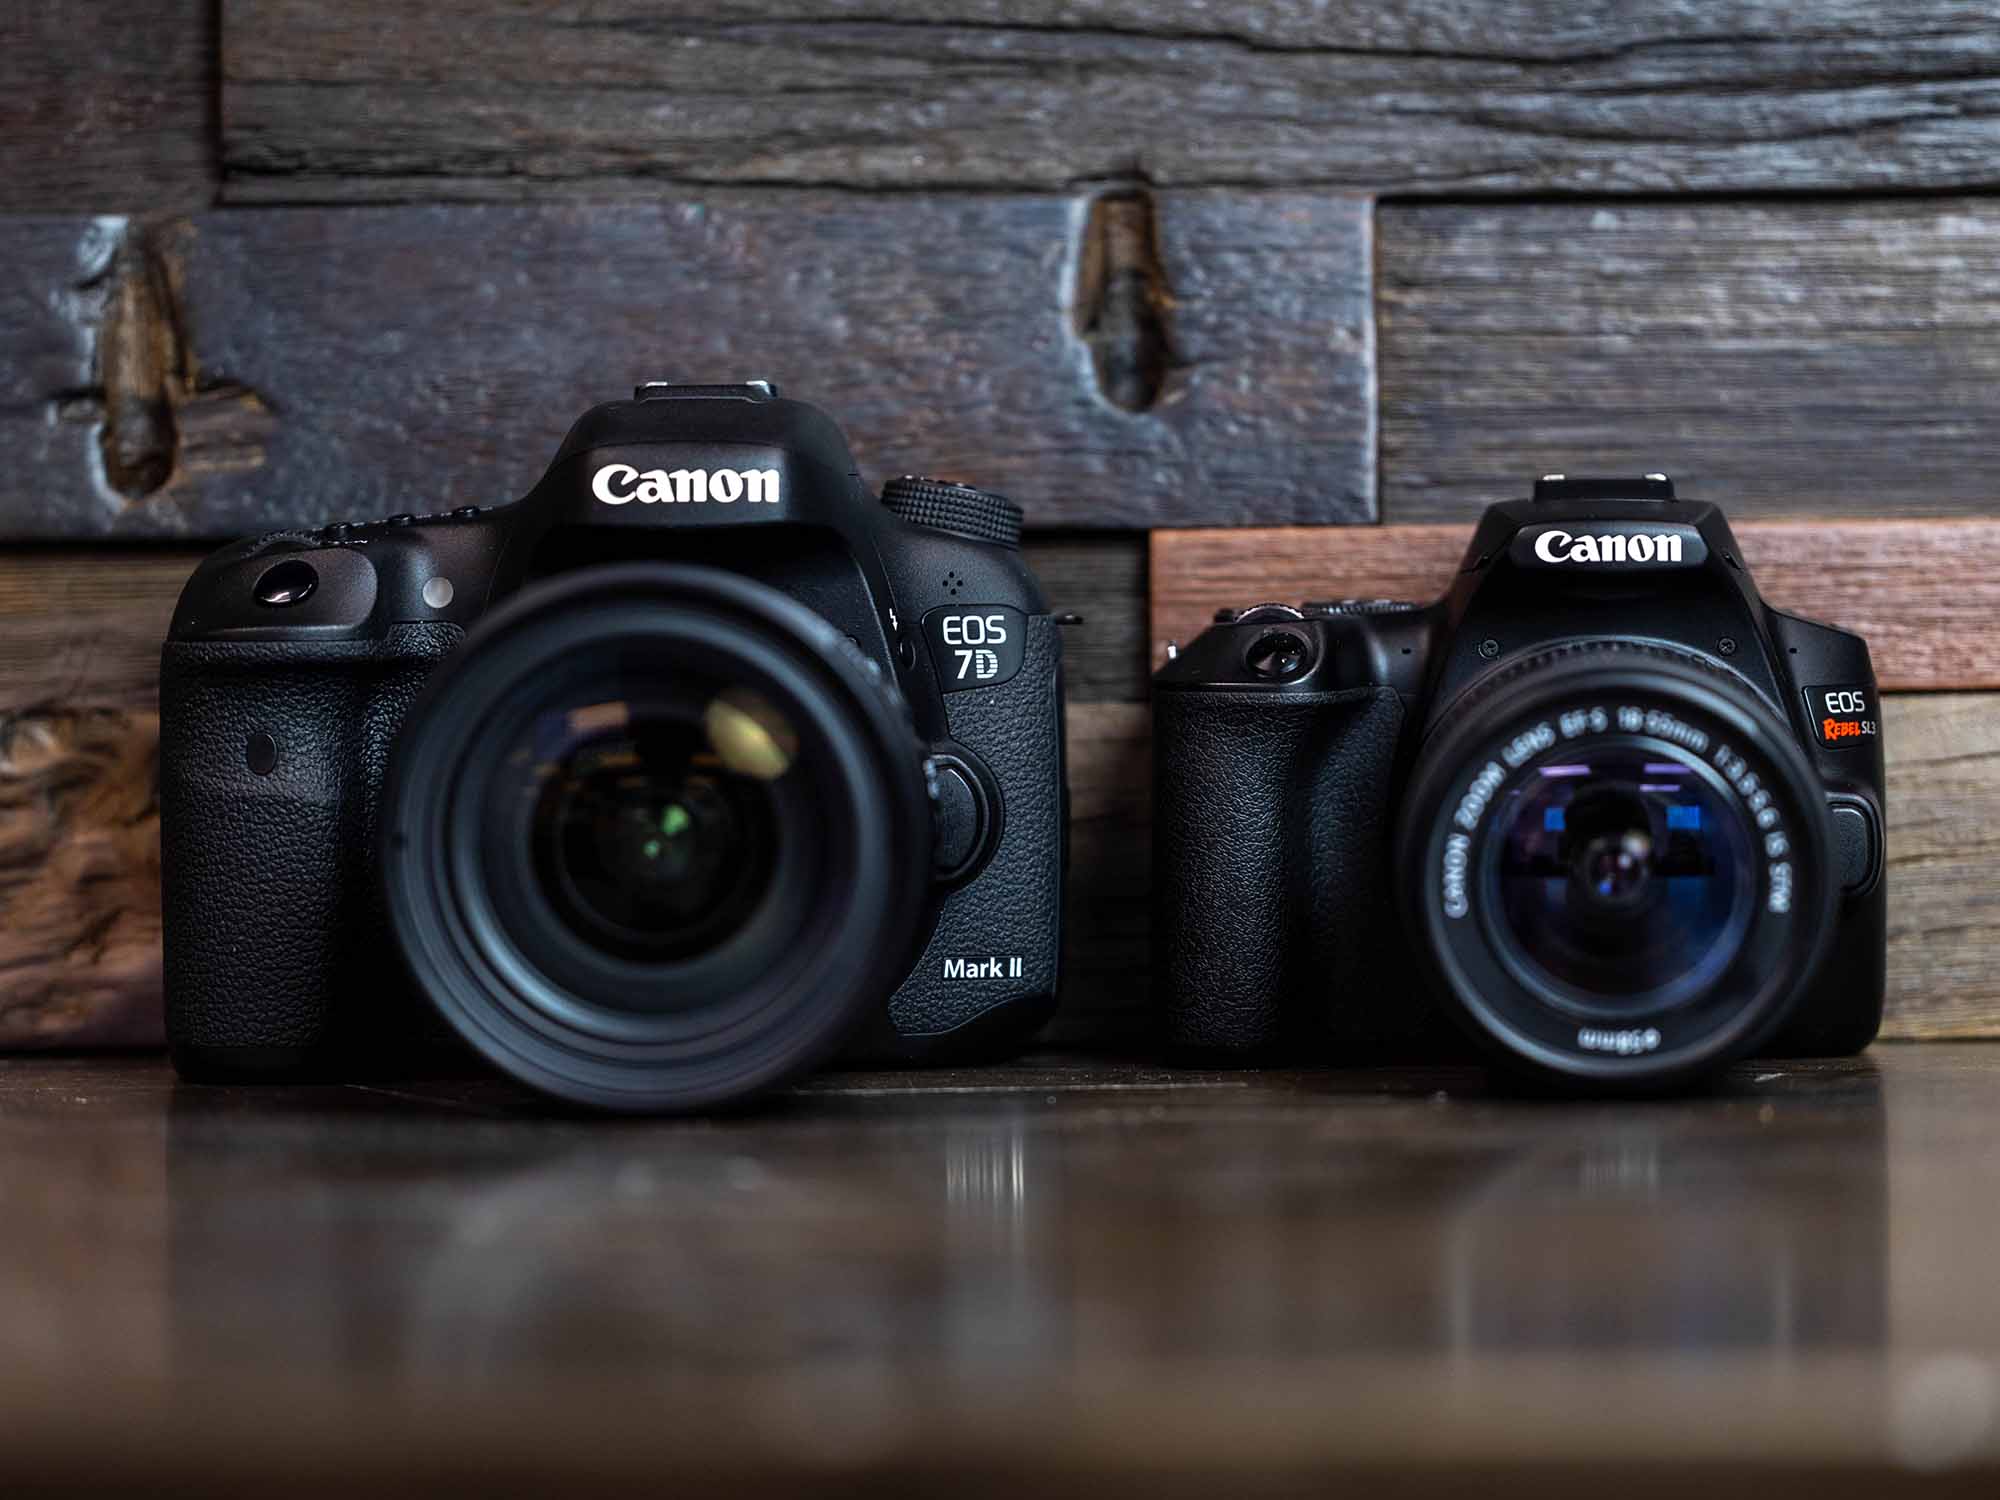 Canon EOS 250D/Rebel SL3 DSLR Camera (Black, Body Only) 